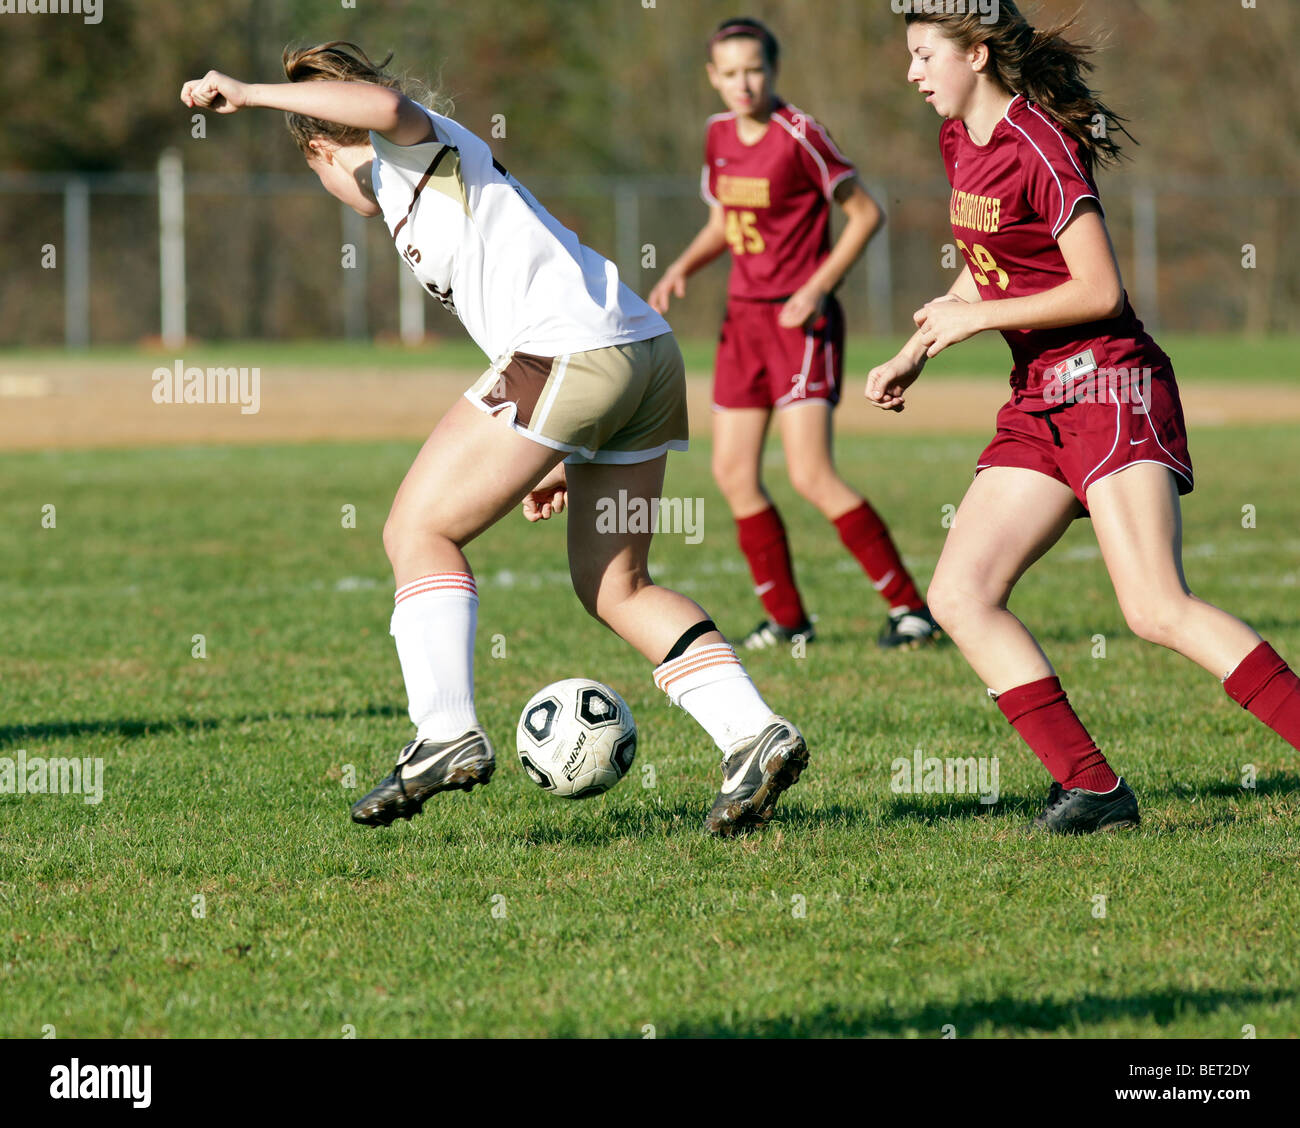 Teenage Girls Playing High School Soccer Football Stock Photo Alamy